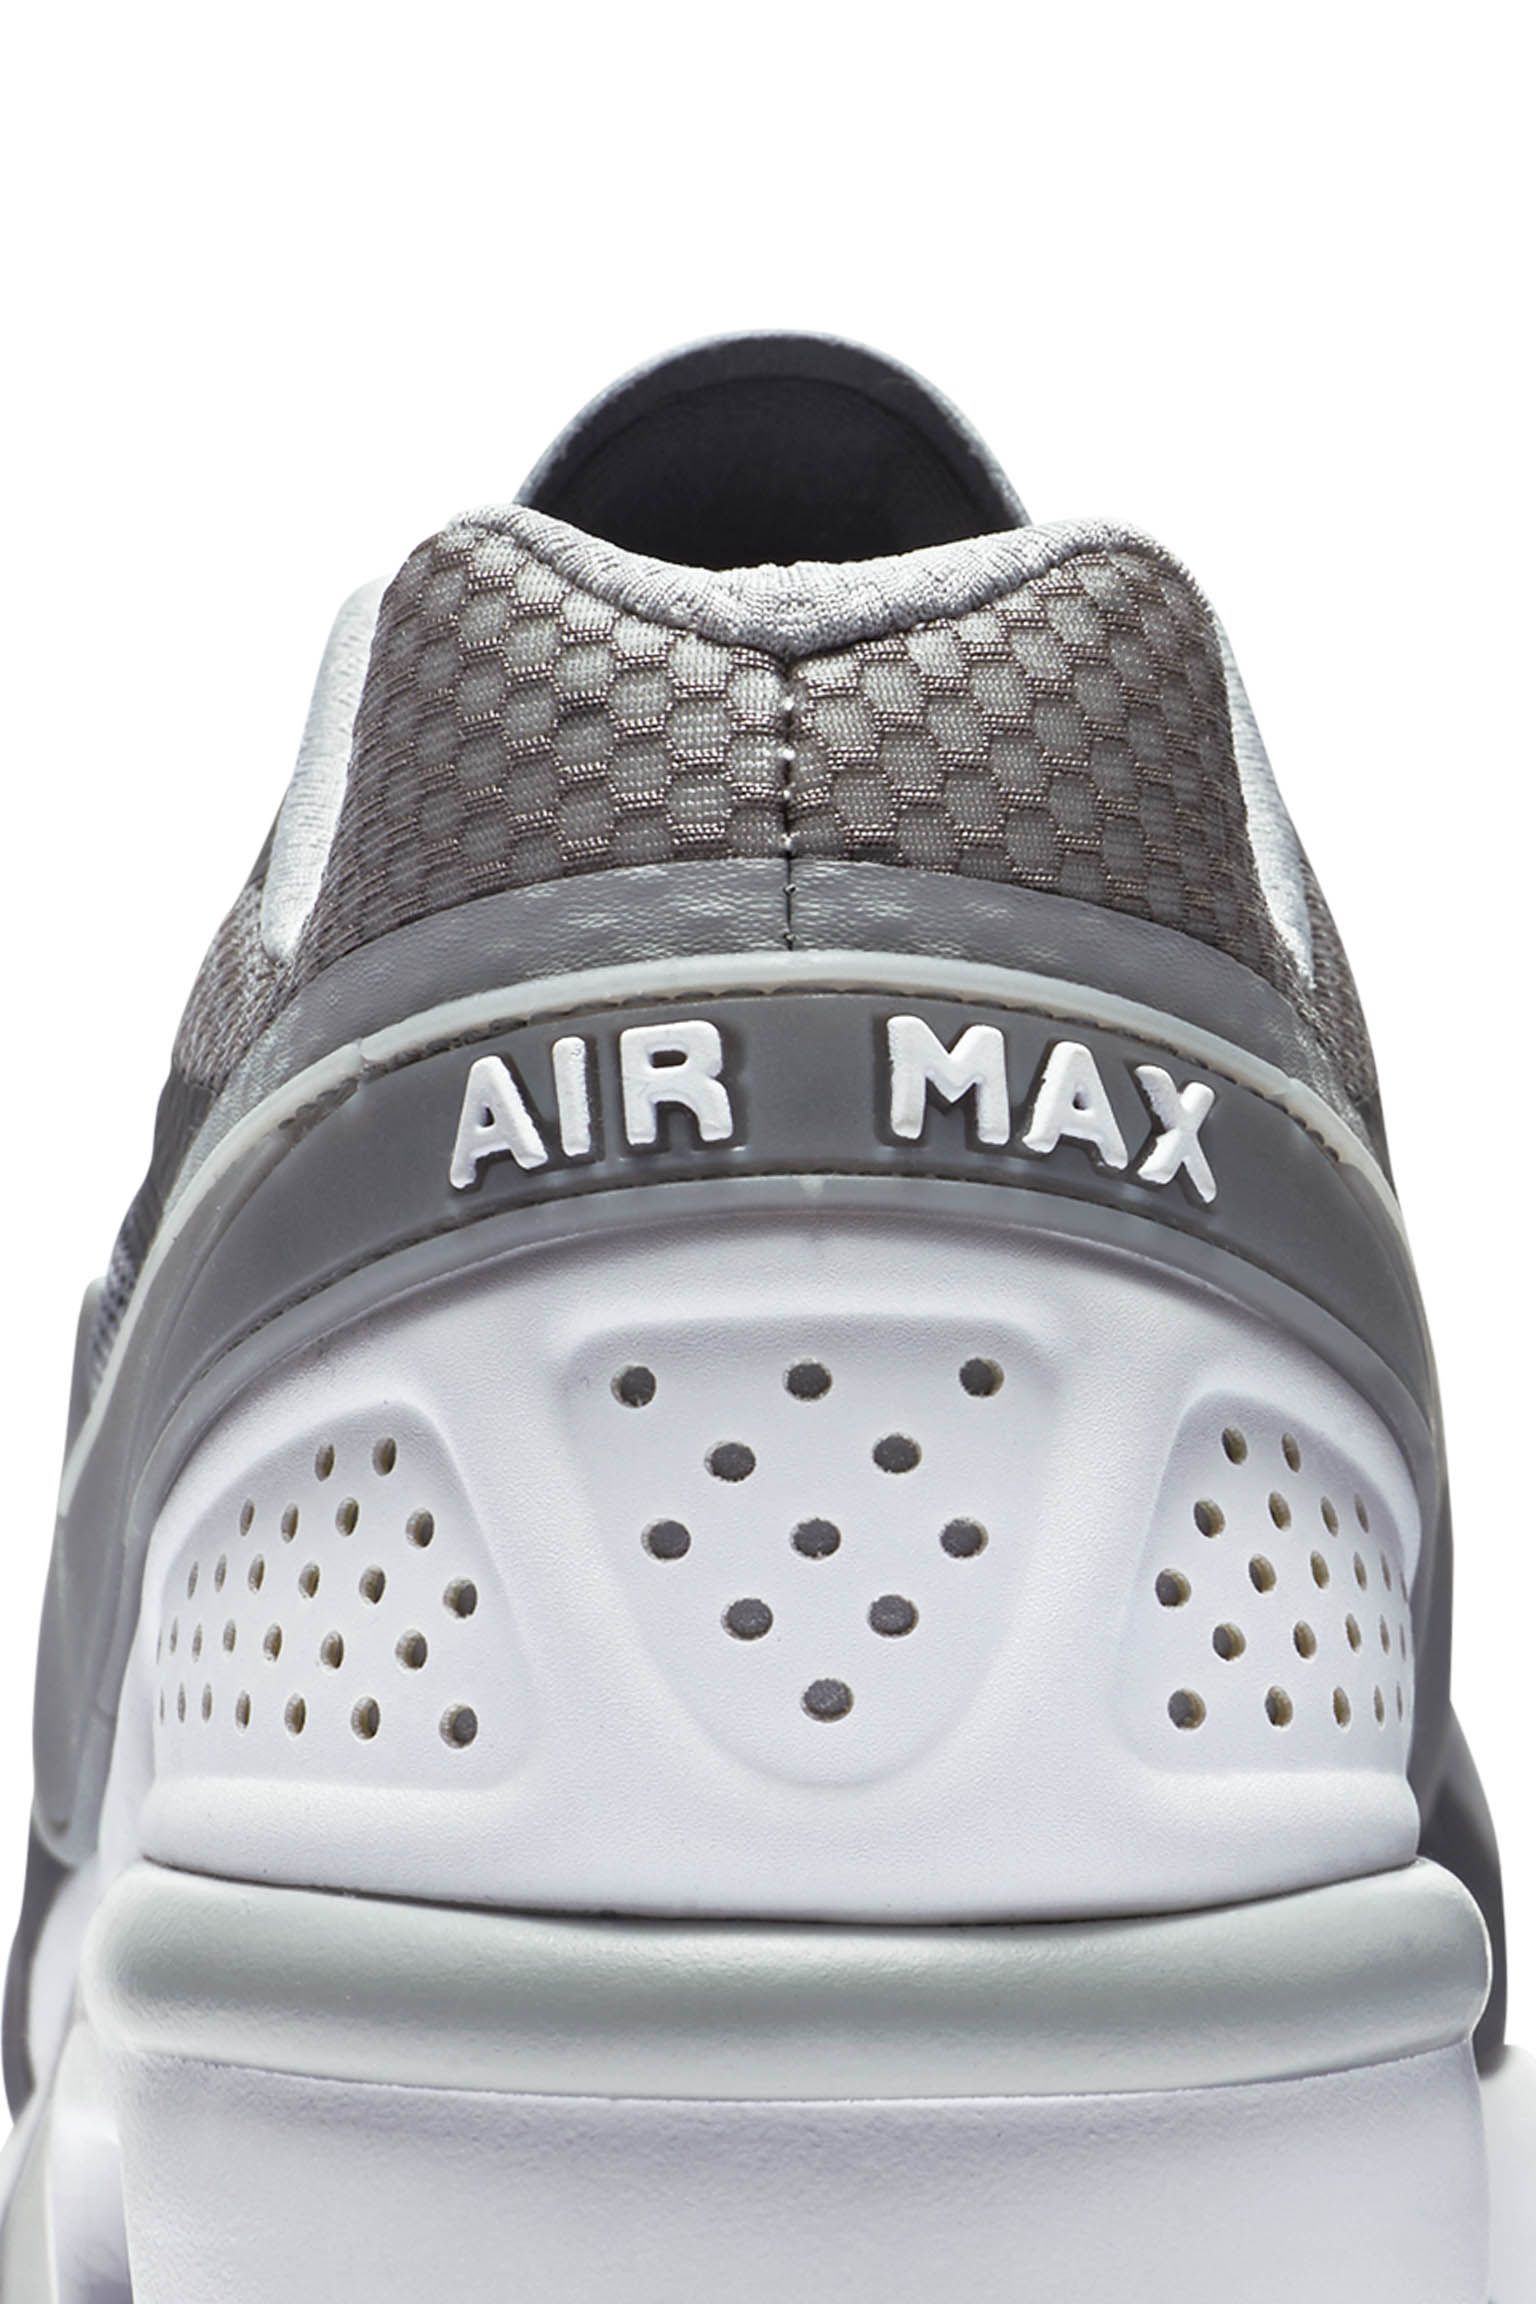 nike air max bw ultra grey